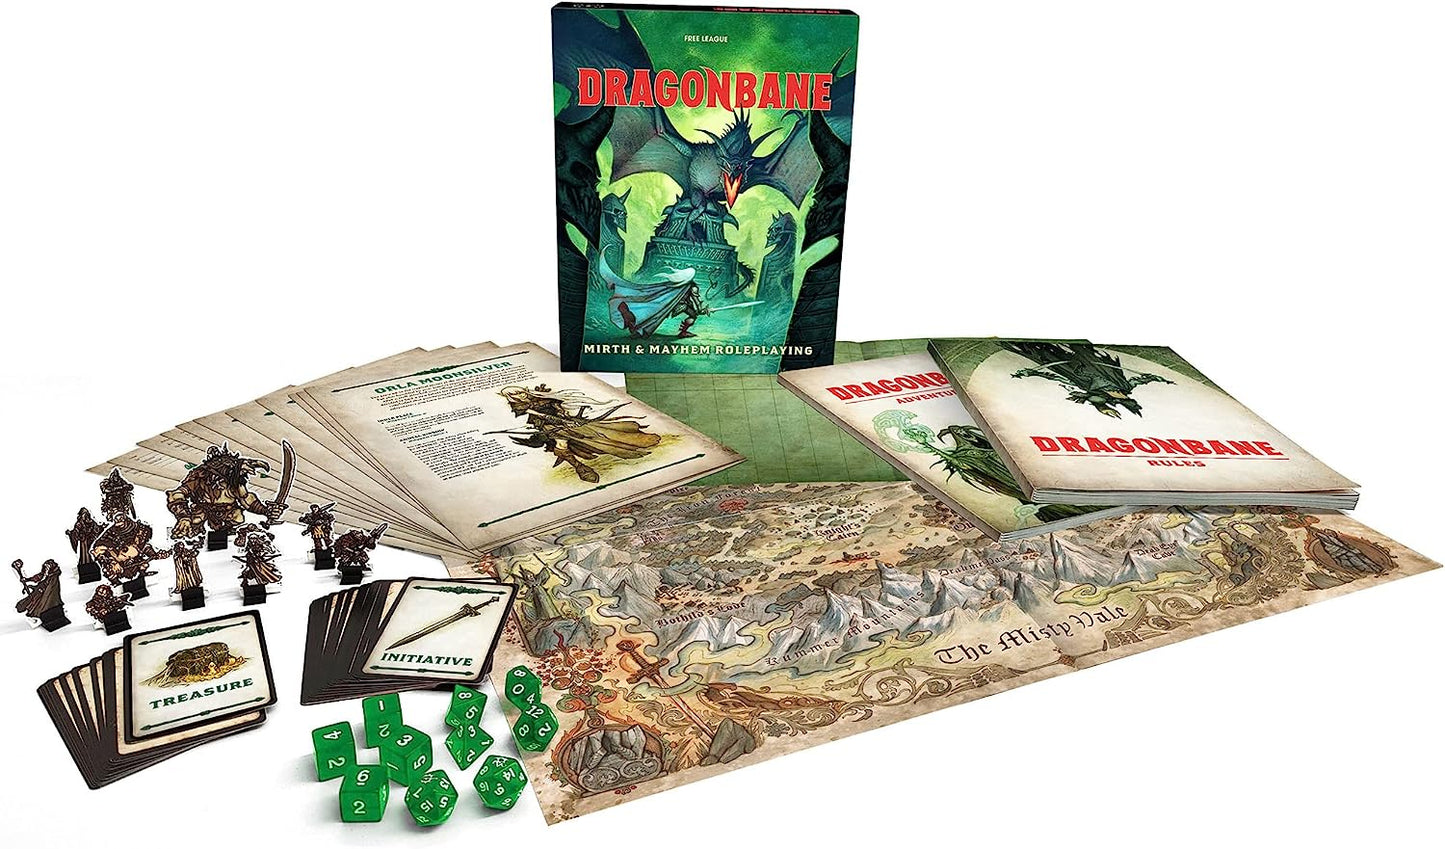 Dragonbane Core RPG Boxed Set